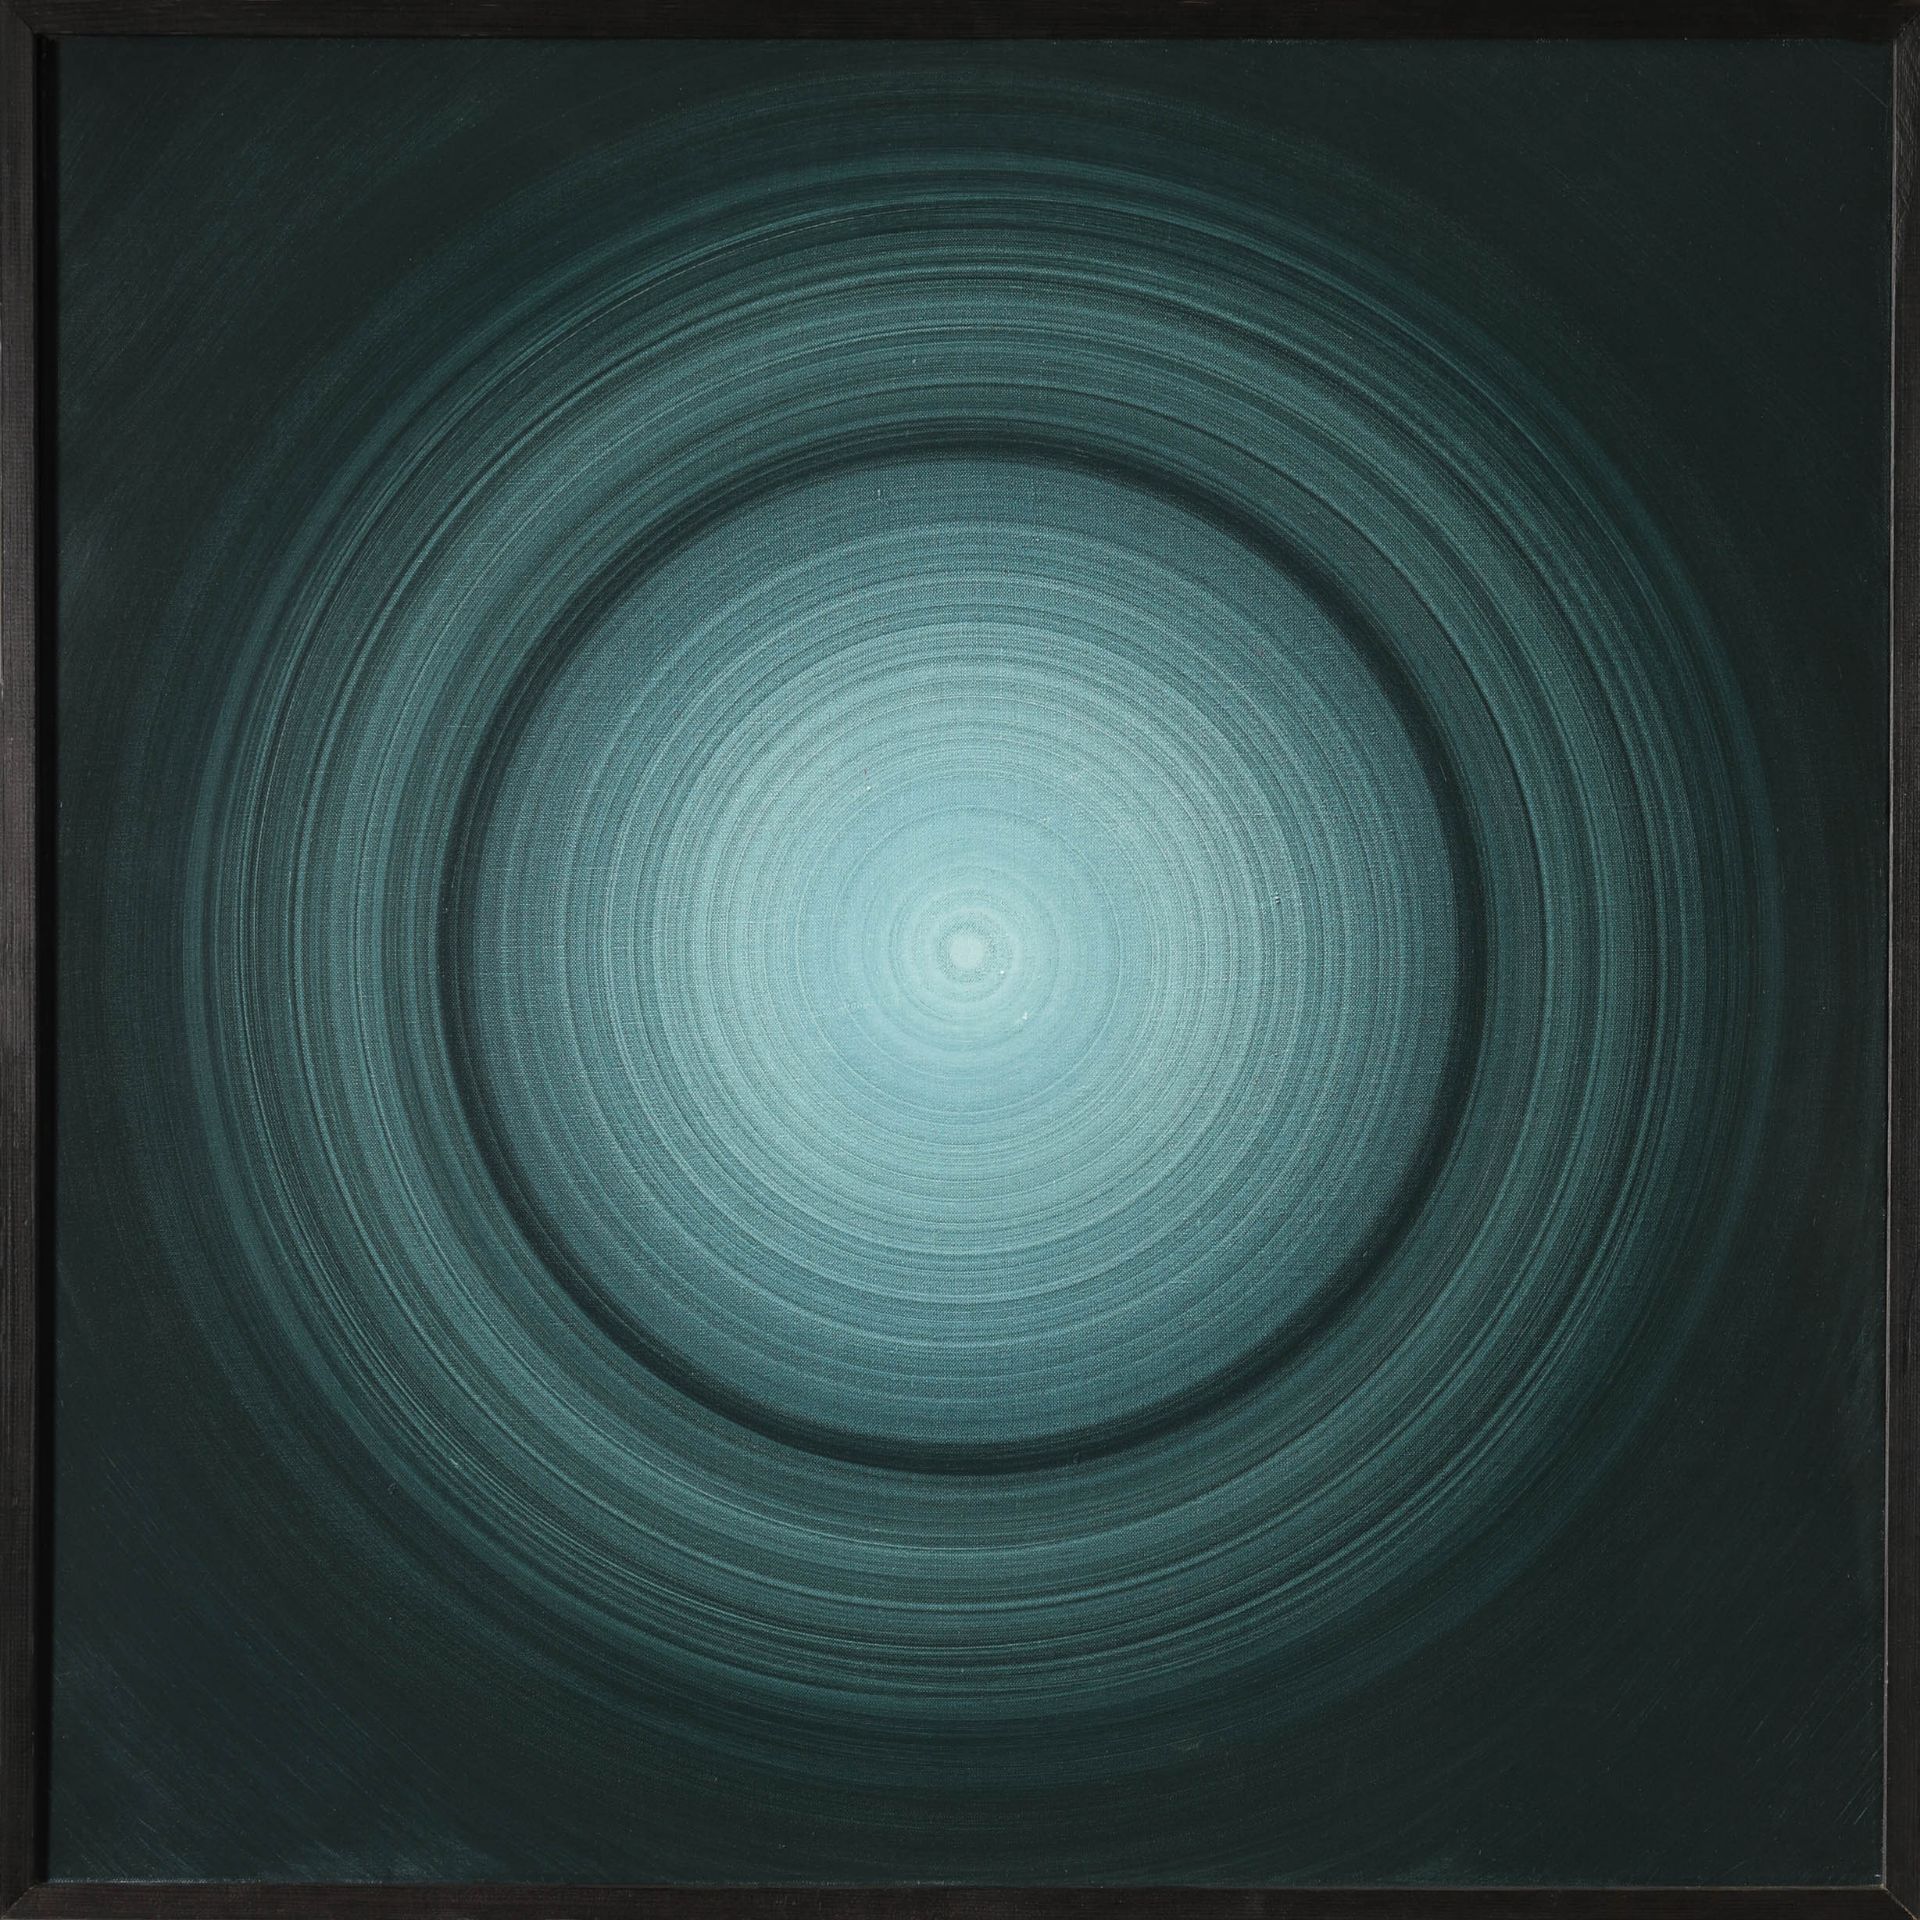 Robert Rotar*, Rotation, 1965, Large spiral green, canvas, 80 x 80 cm - Image 2 of 5